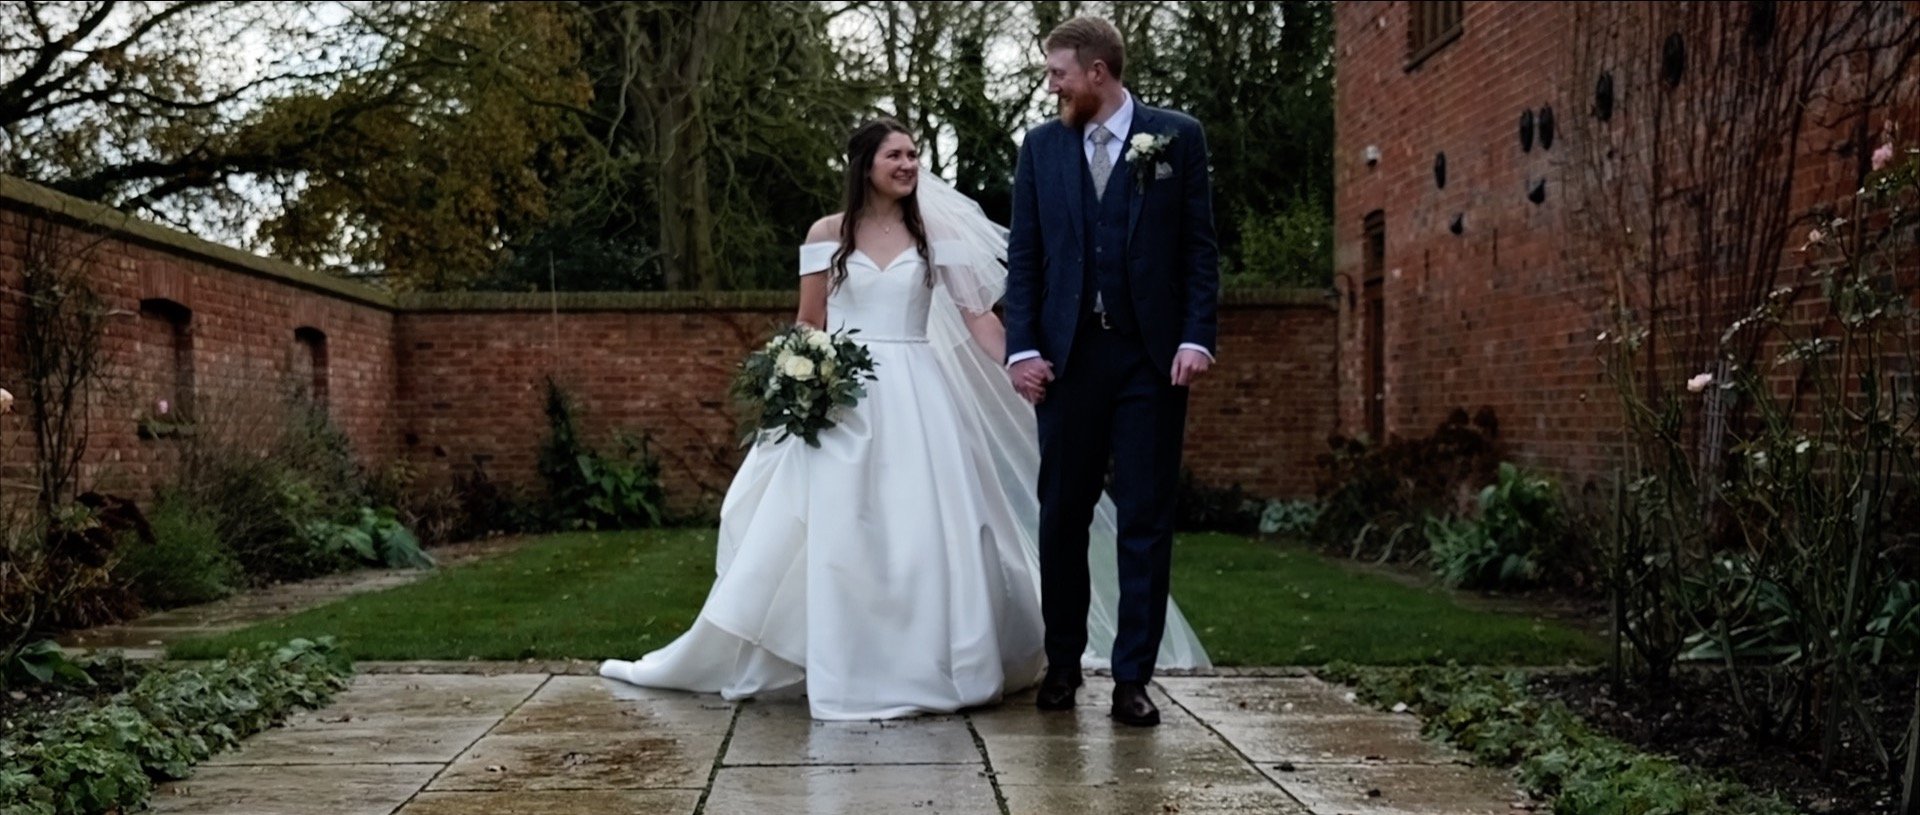 Apton Hall Wedding Videography - 3 Cheers Media - Bride and Groom.jpg